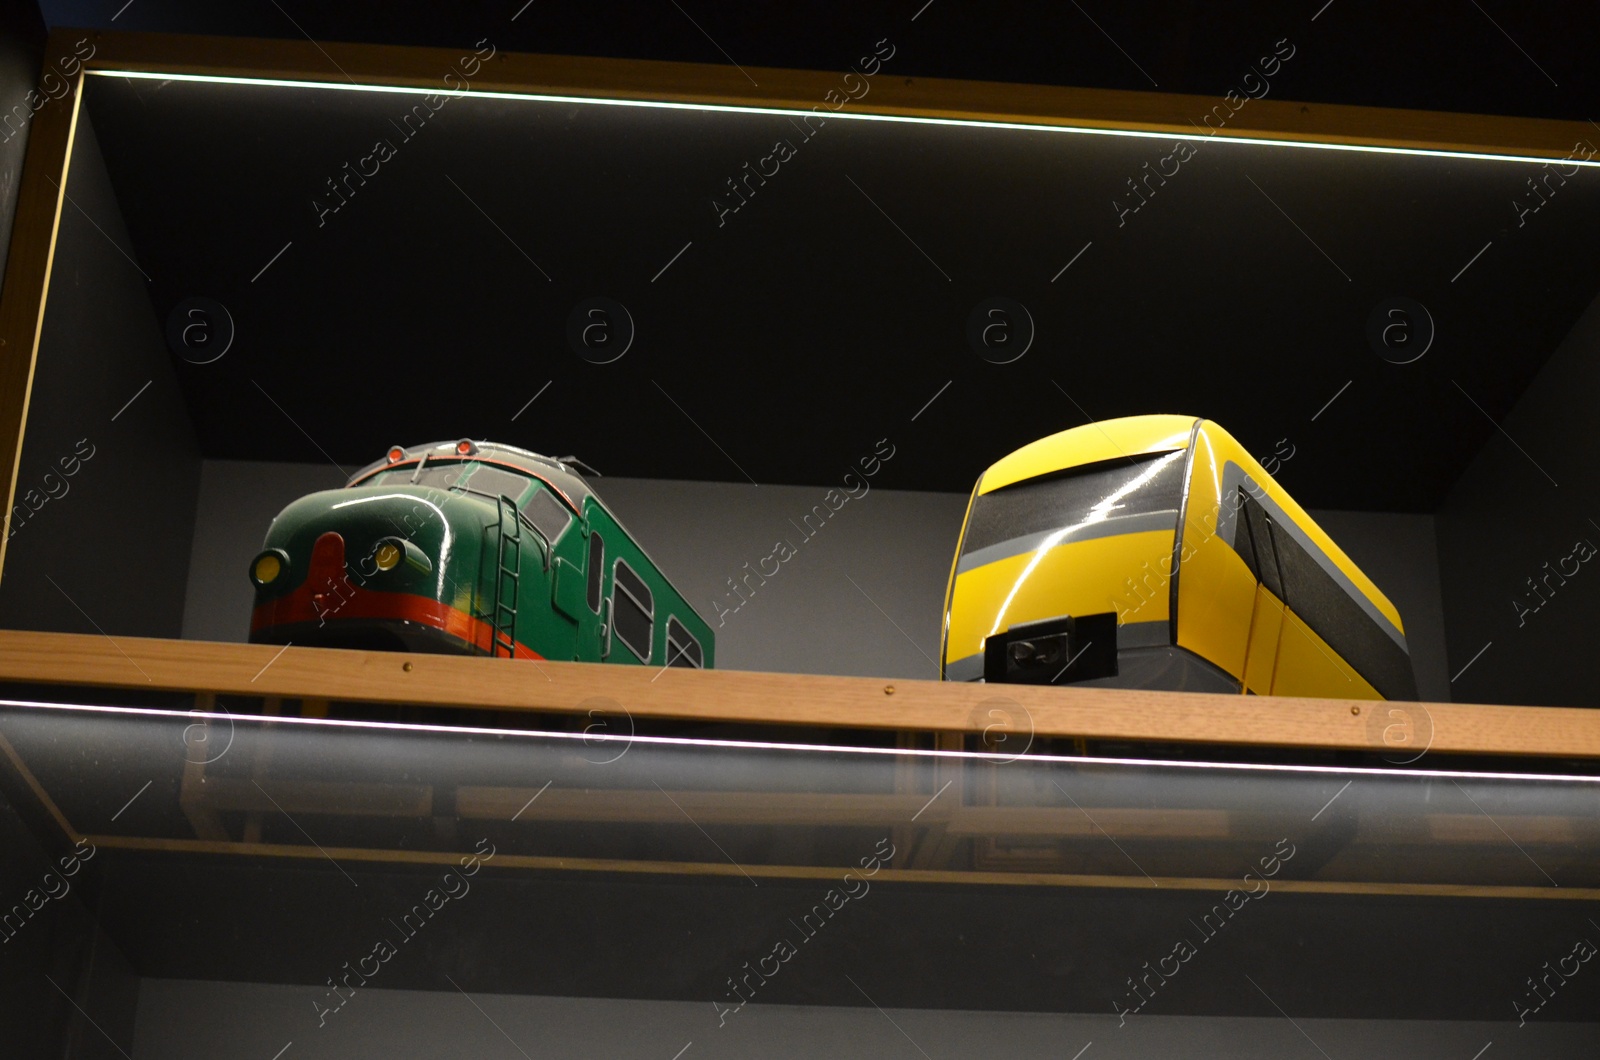 Photo of Utrecht, Netherlands - July 23, 2022: Models of old trains on display in Spoorwegmuseum